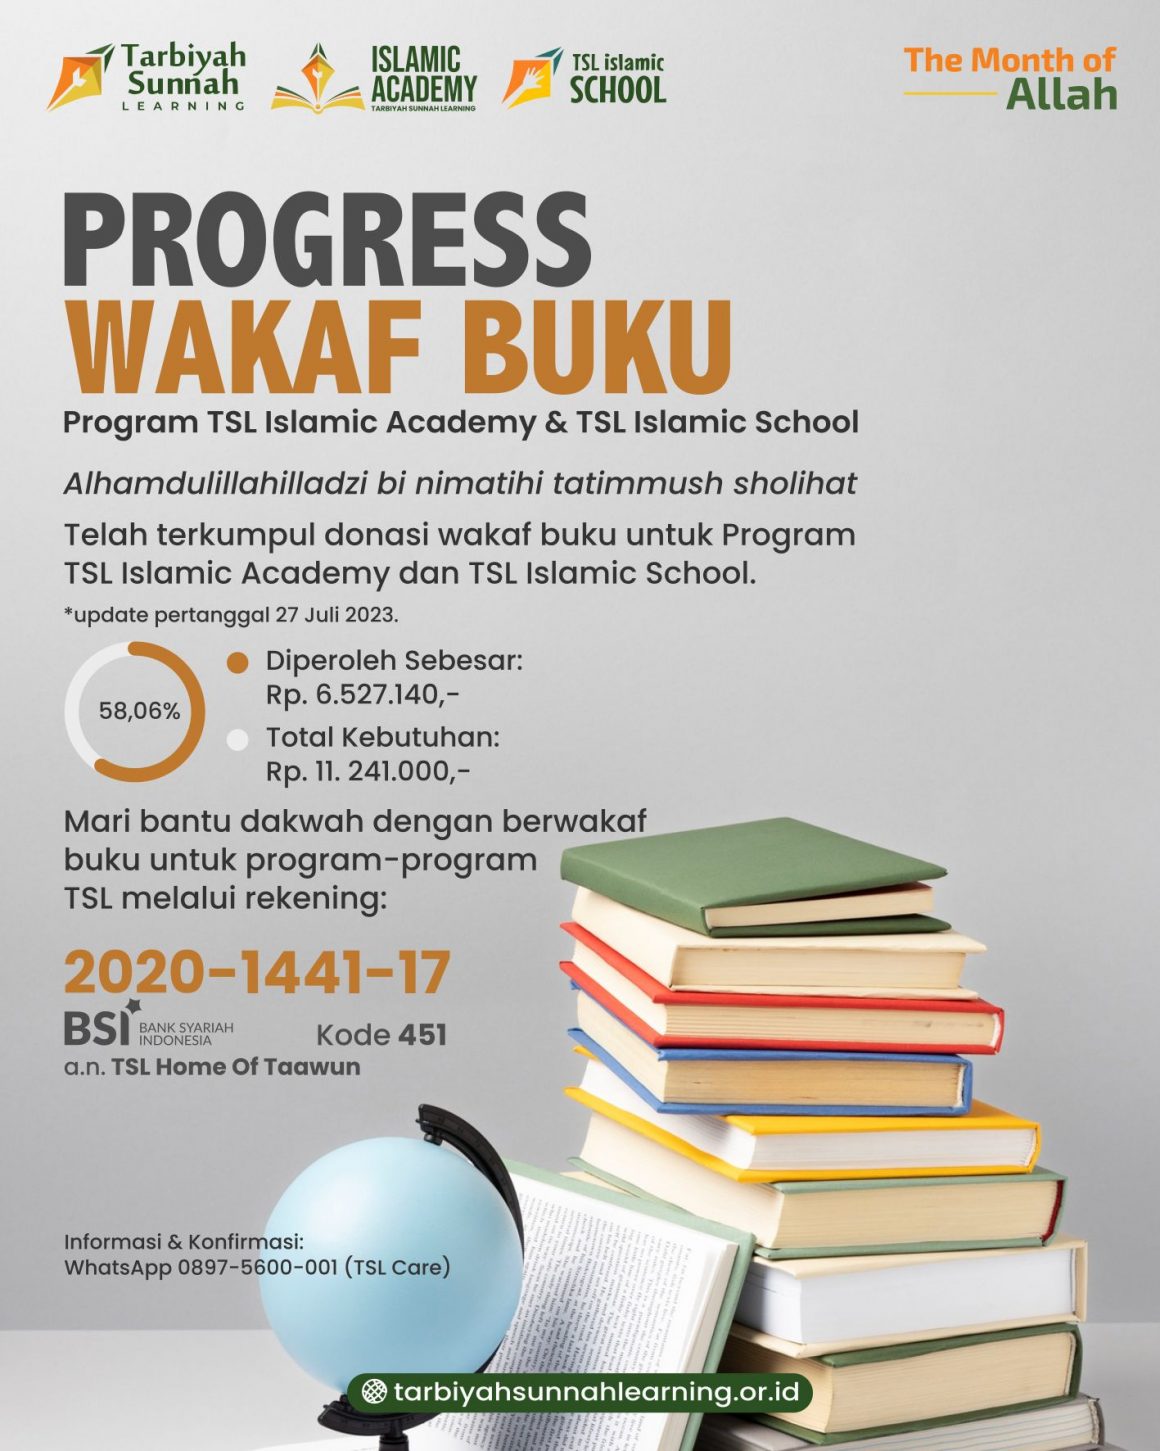 Progress Wakaf Buku Program TSL Islamic Academy dan TSL Islamic School